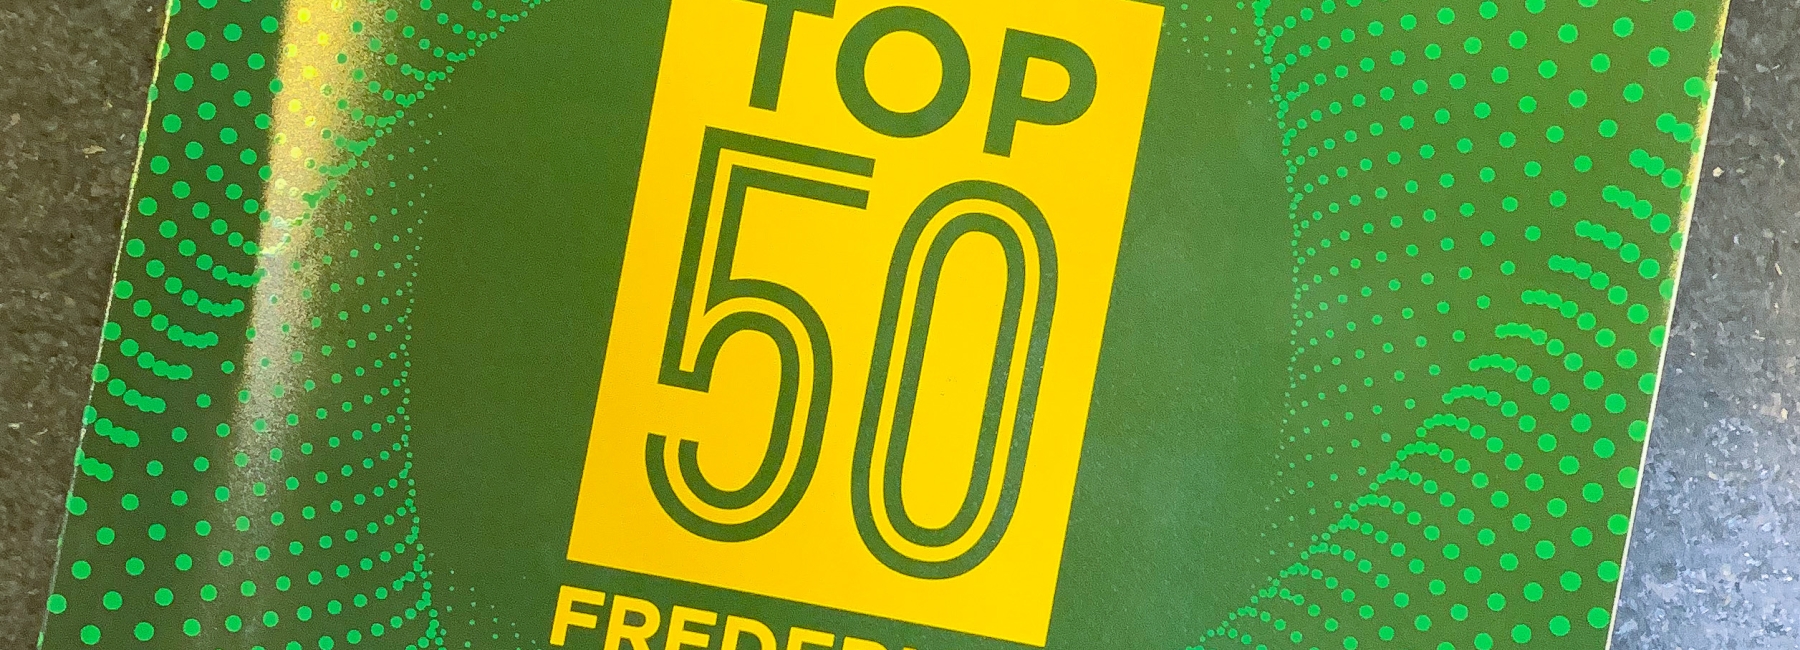 Top 50 Frederick